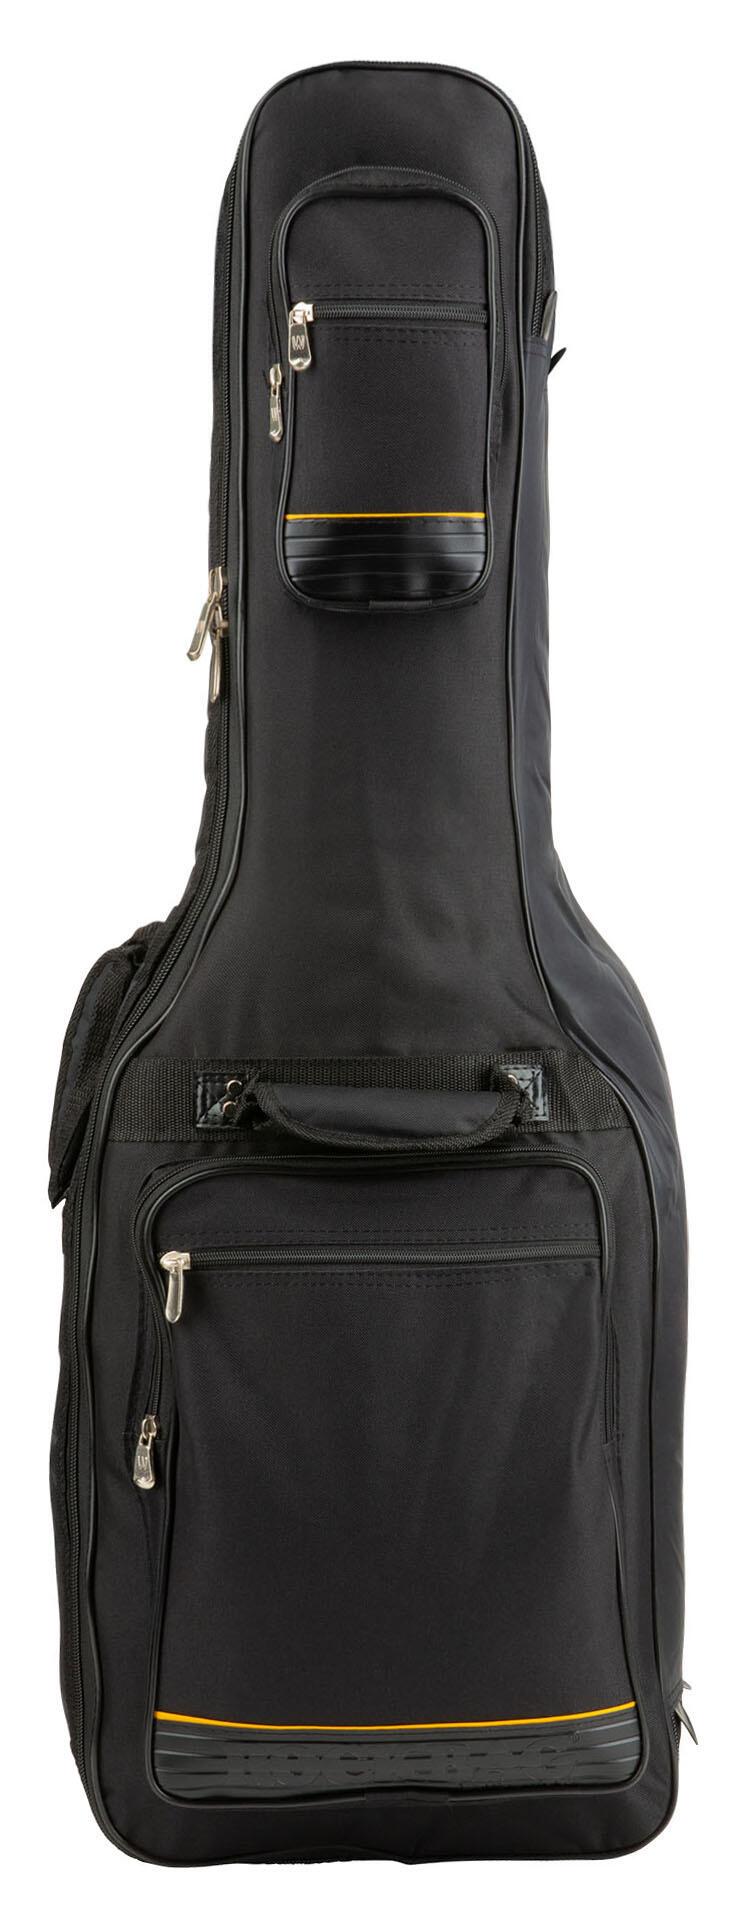 RockBag - Premium Line - Double Gig Bag for 2 Electric Guitars